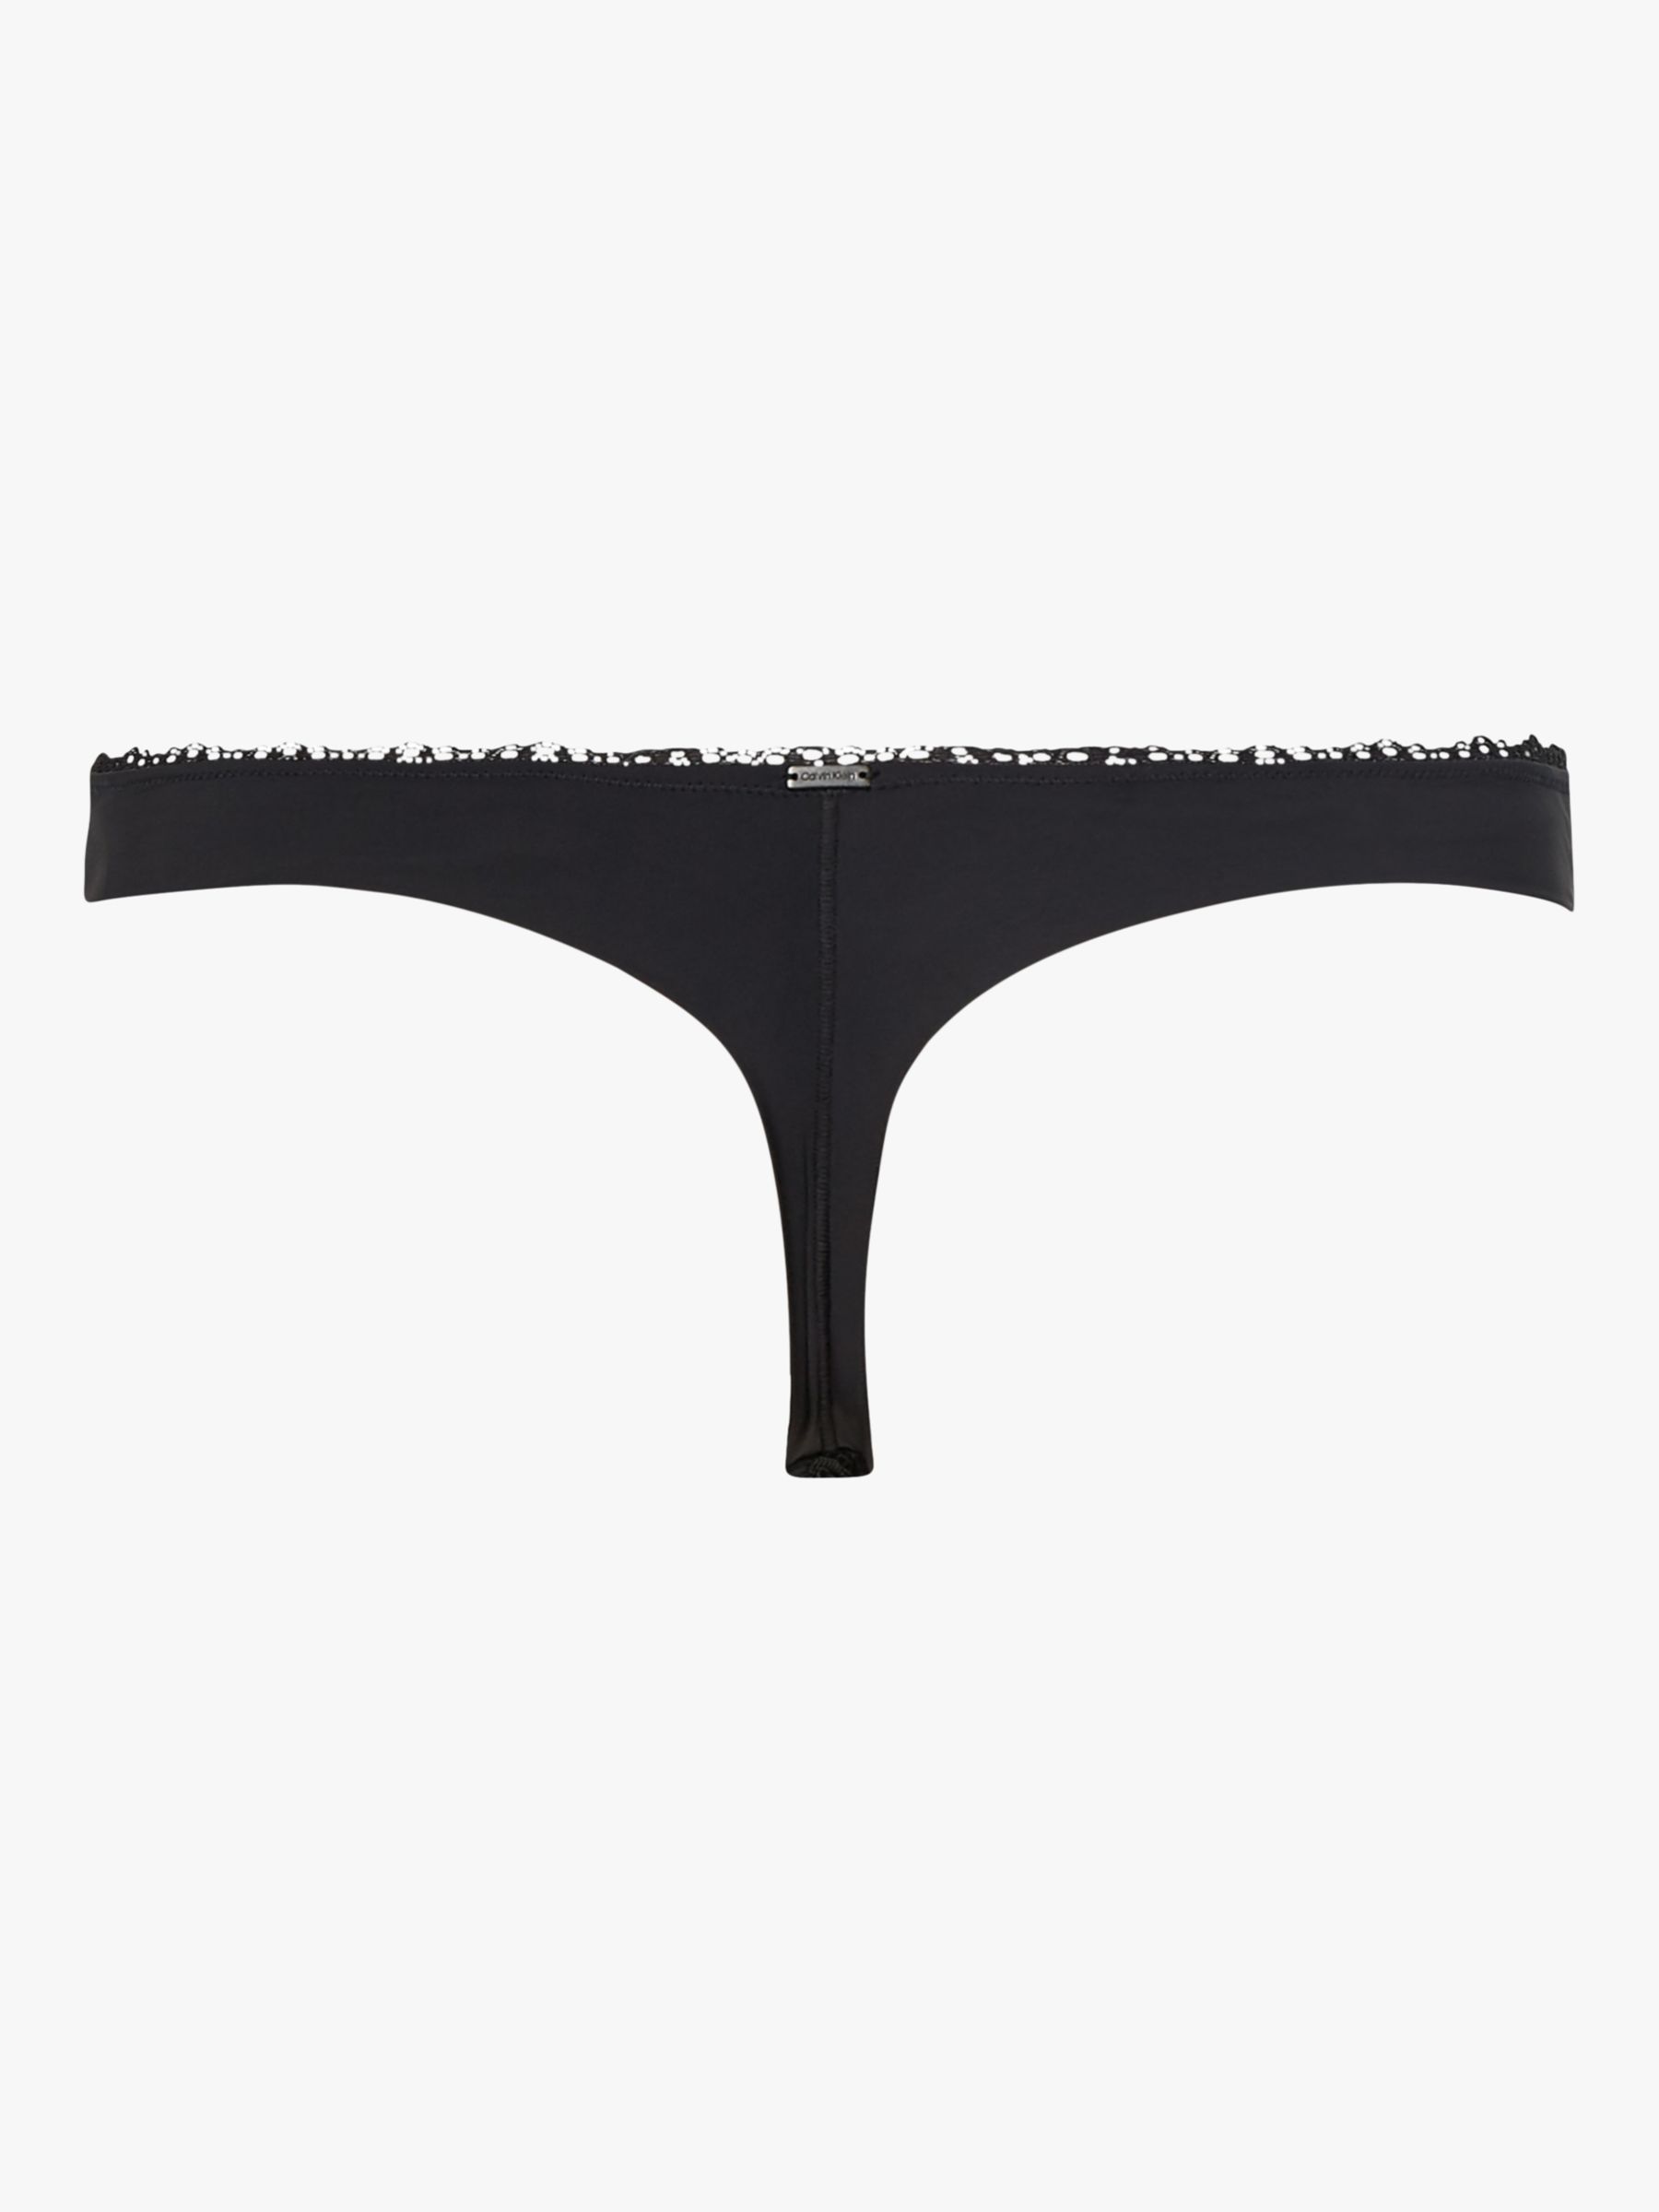 Calvin Klein Seductive Comfort Thong, Black, XS